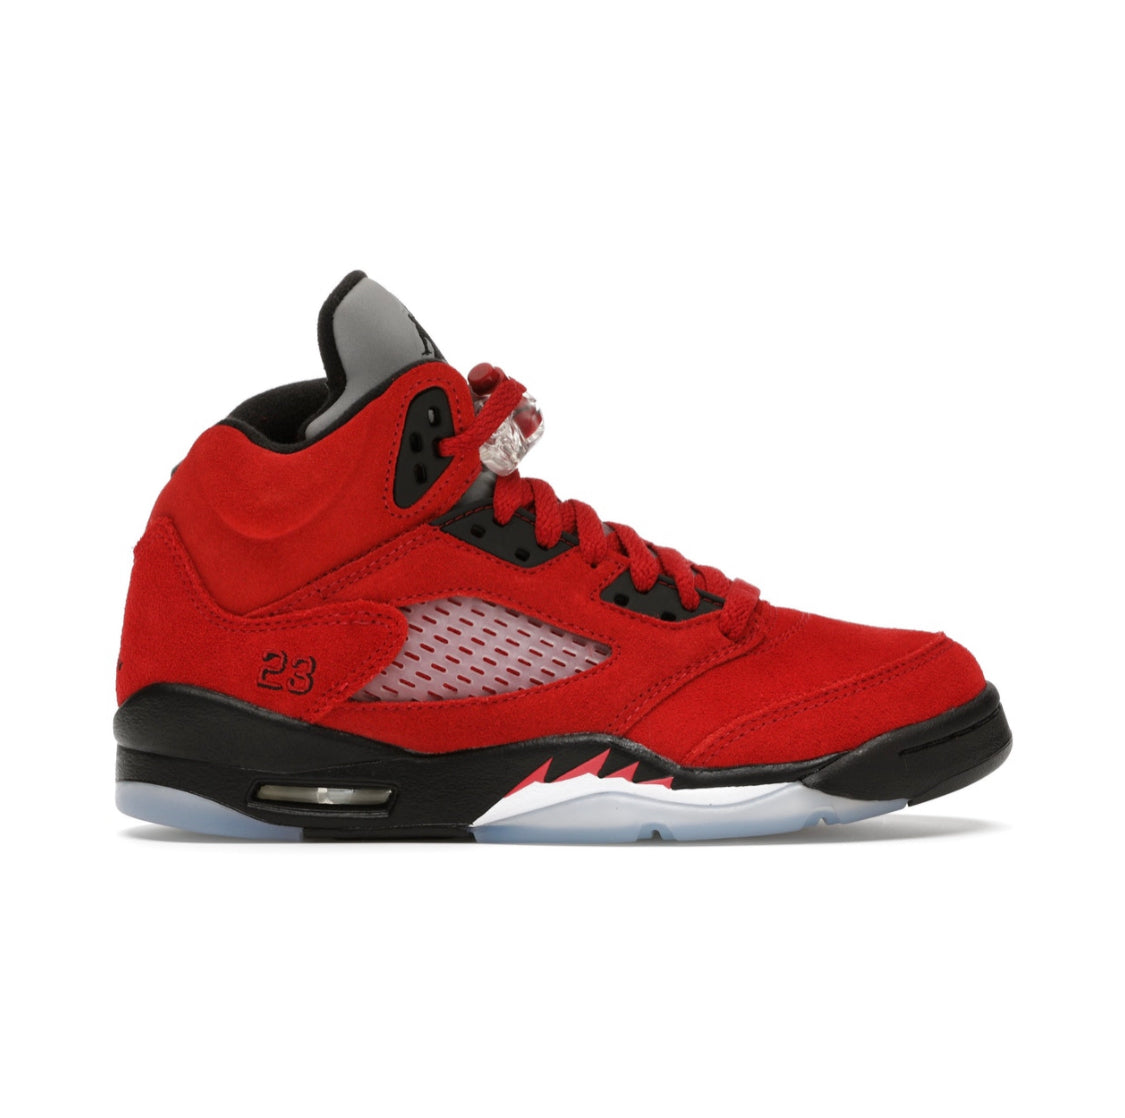 Jordan 5 Retro “Raging Bulls” (GS)